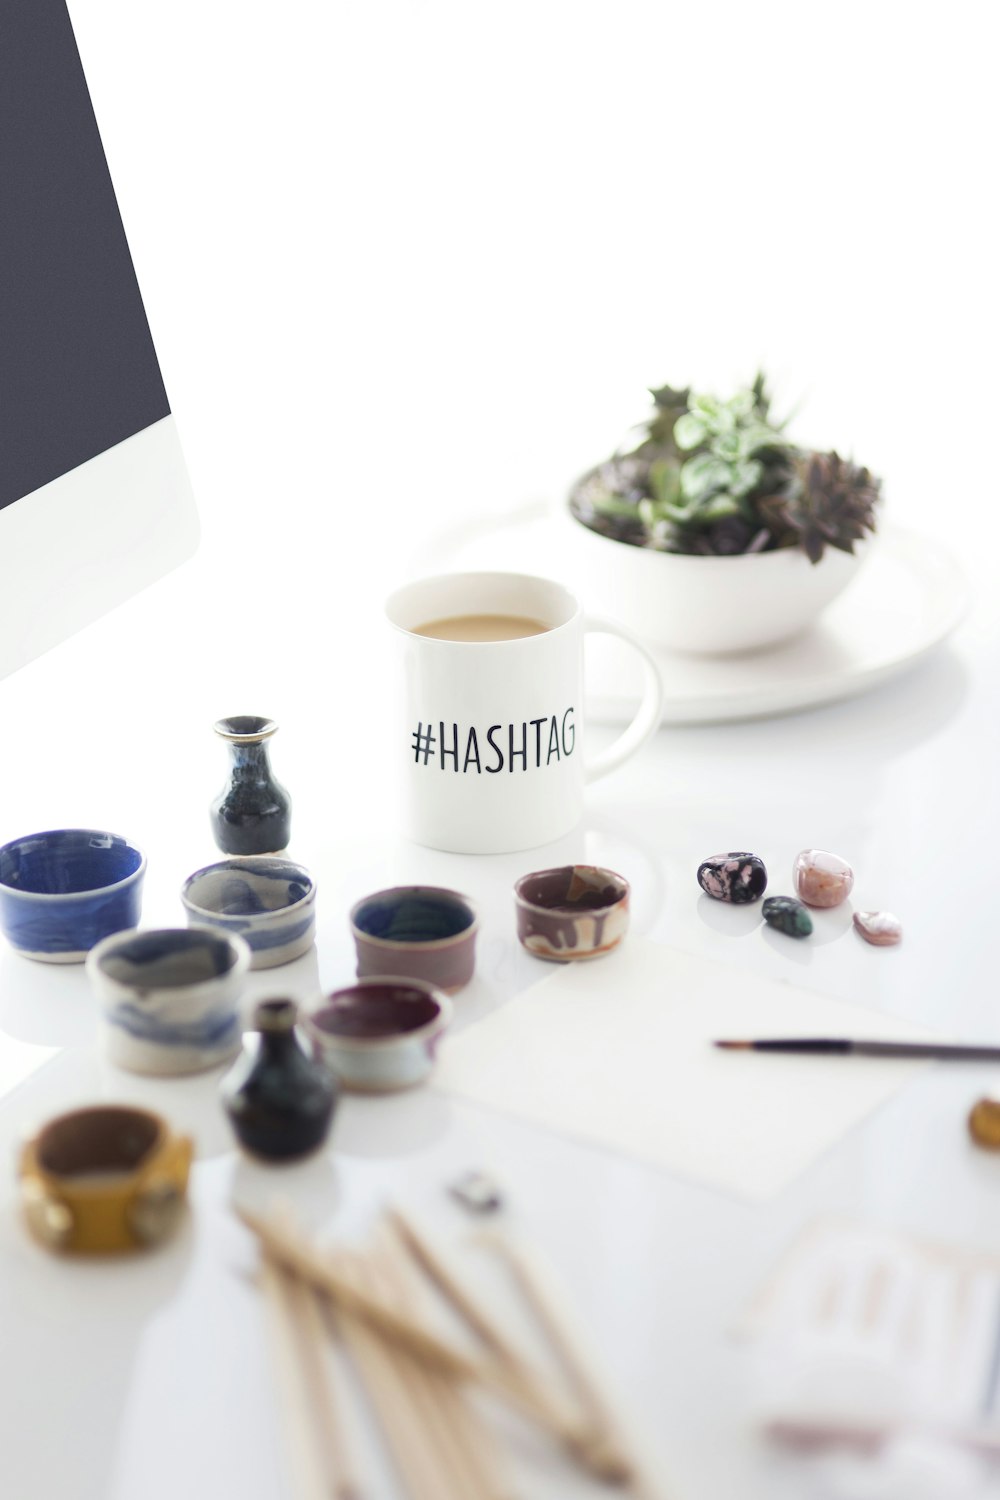 white #hashtag ceramic mug filled with coffee